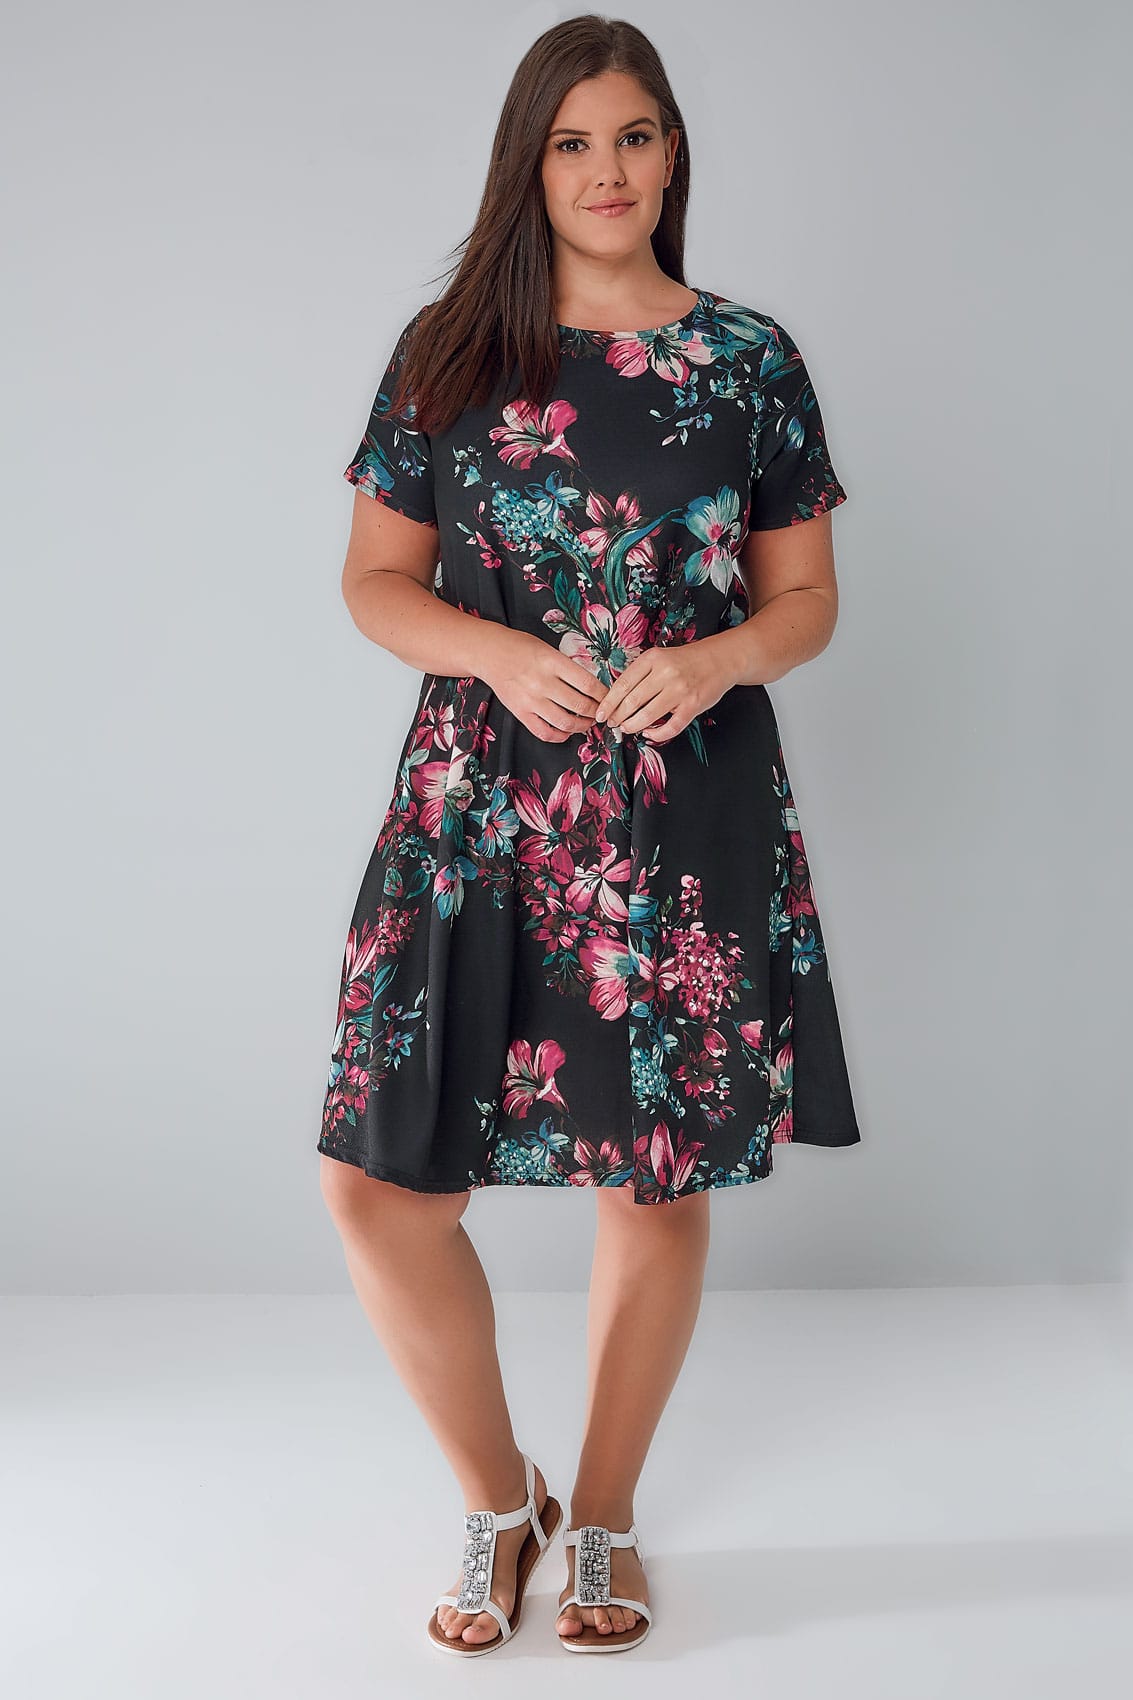 Black, Pink & Teal Floral Print Swing Dress Plus Size 16 to 36